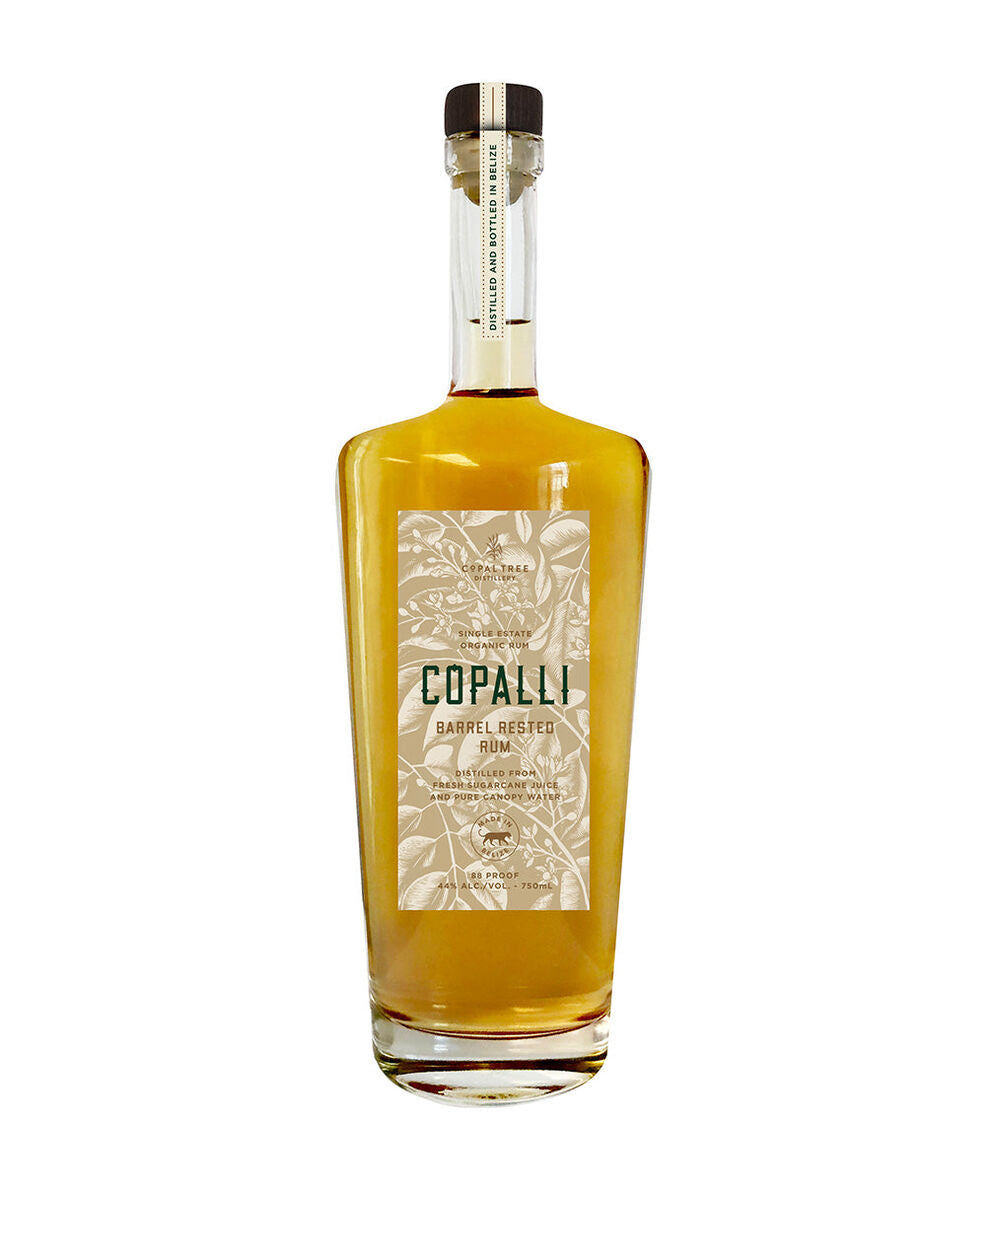 Copalli Barrel Rested Organic rum